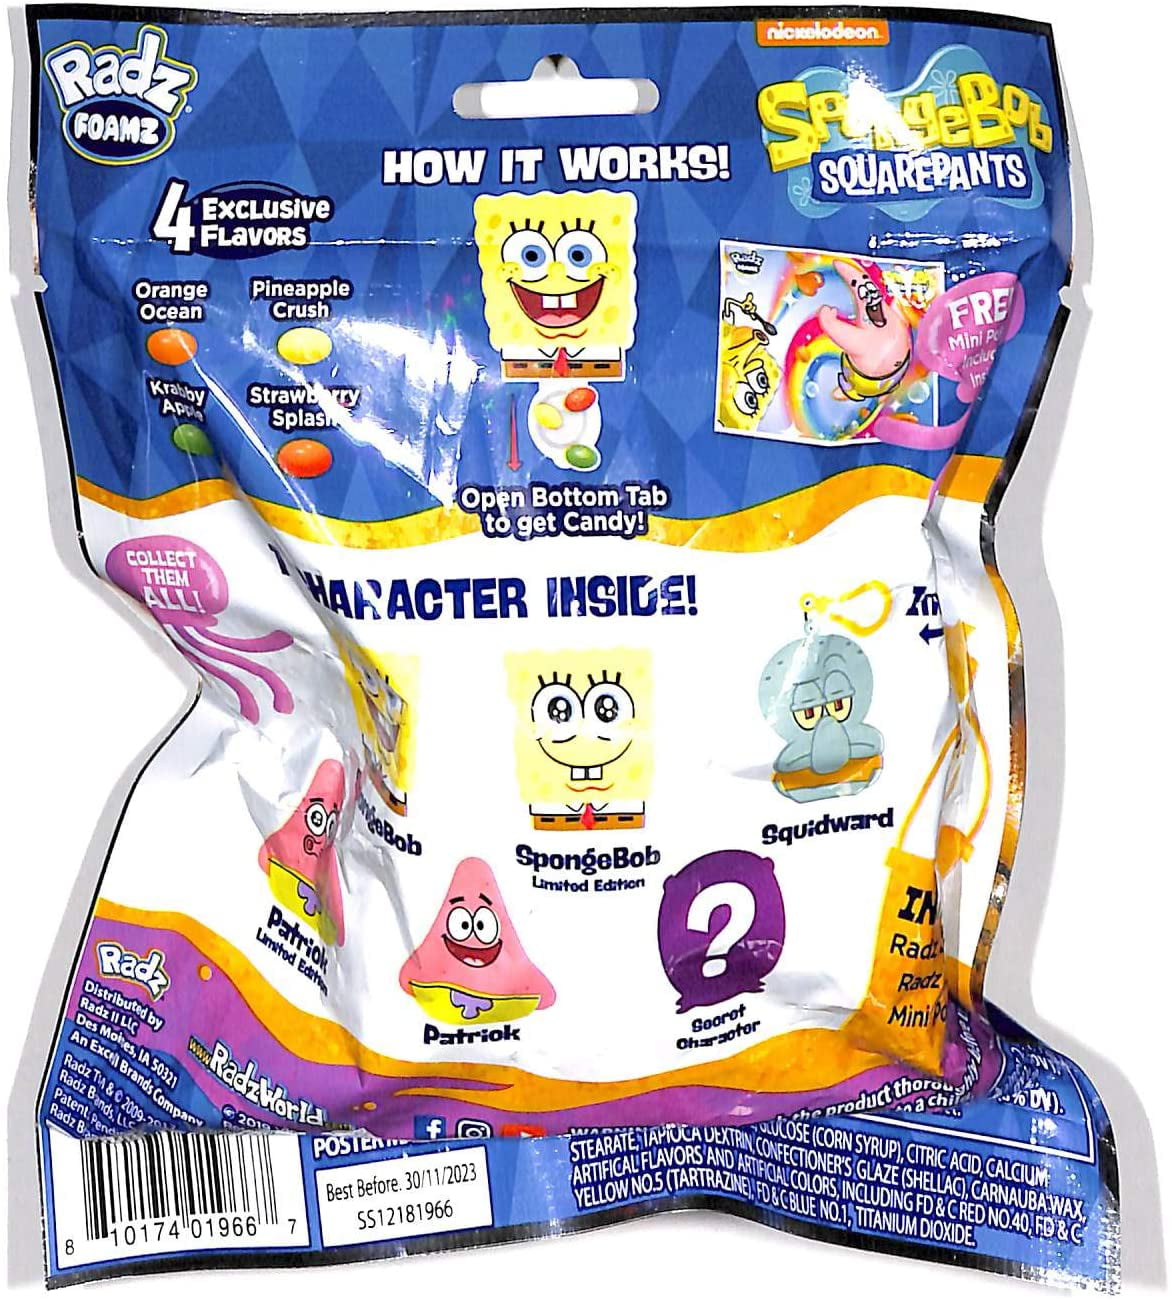 6 Packs RADZ 3 in 1 Spongebob FOAMZ Candy,Mini Poster 